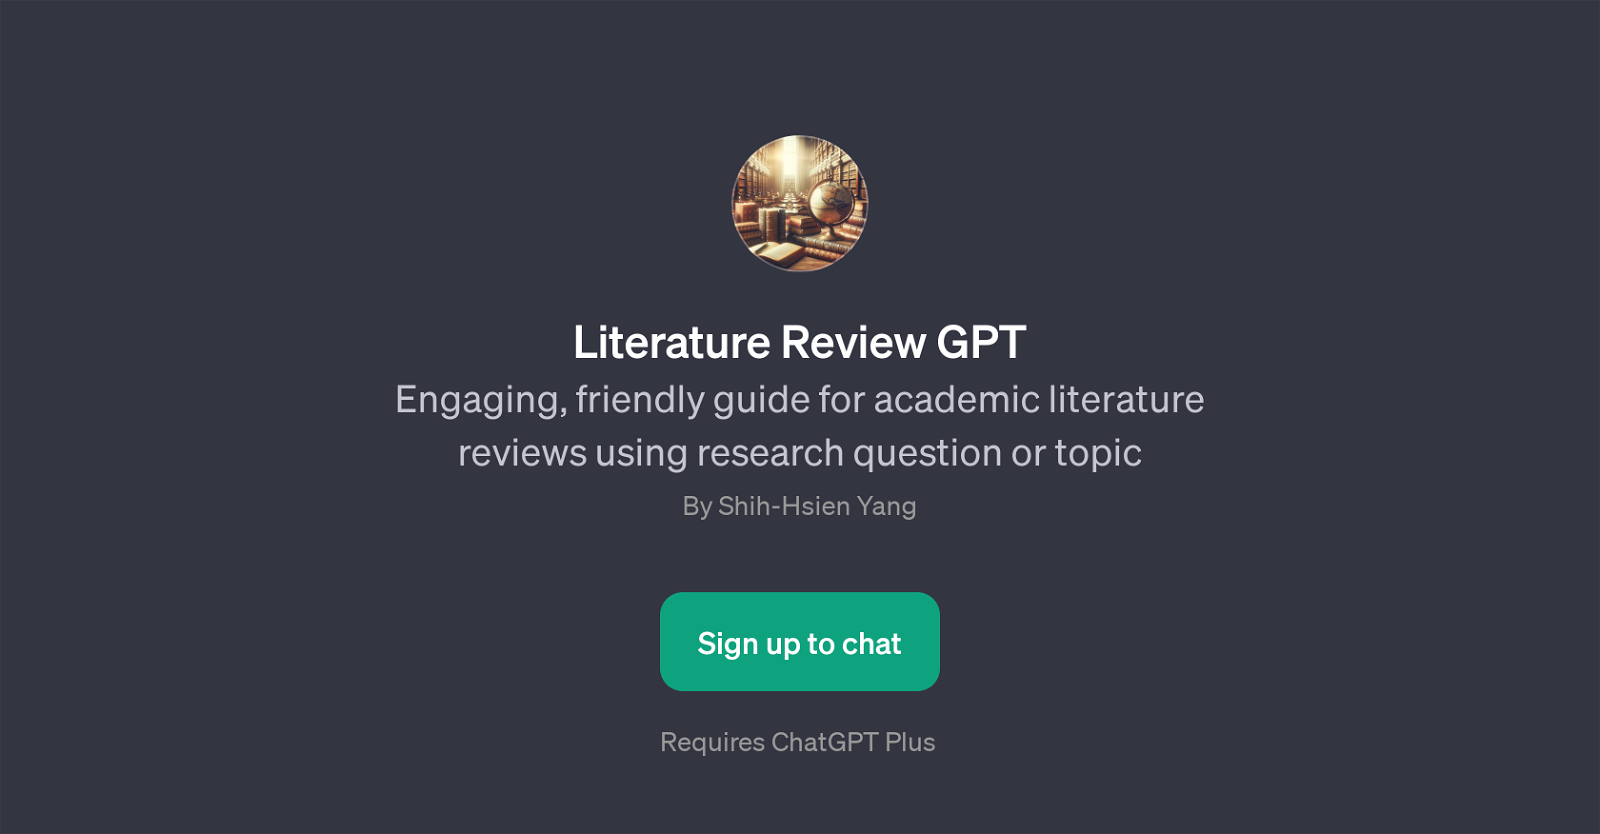 Literature Review GPT website